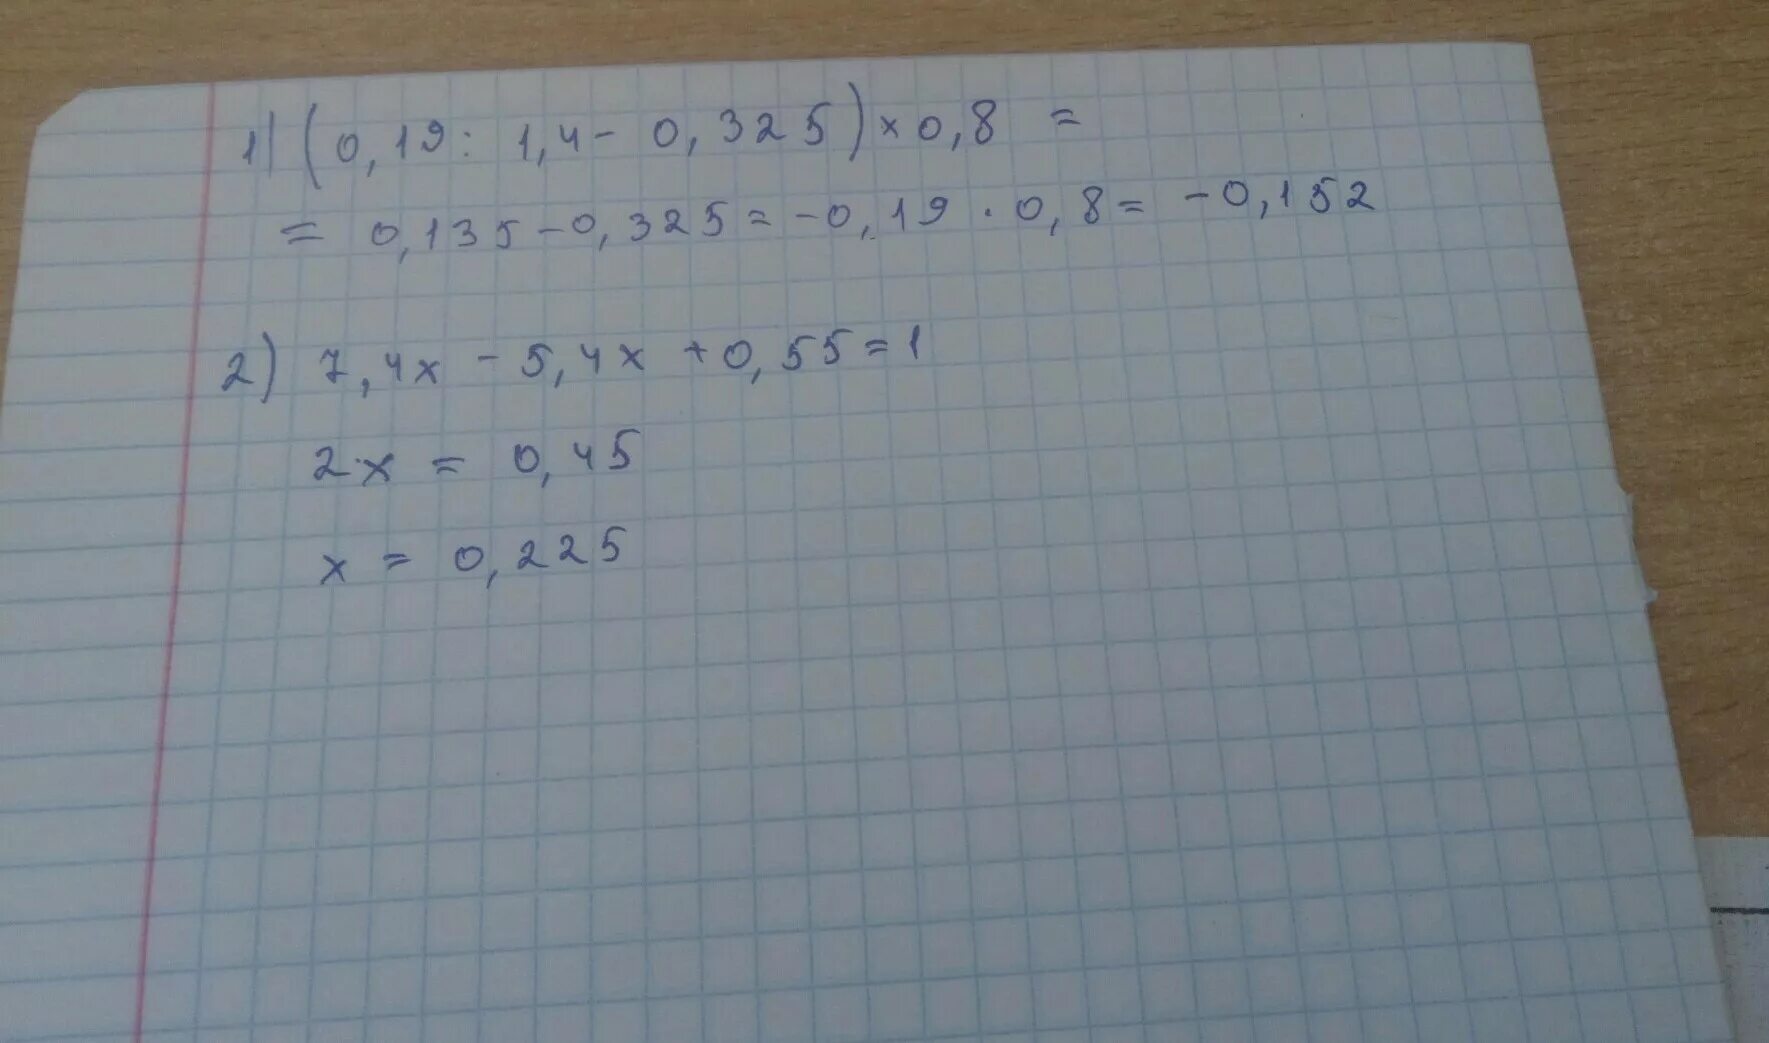 4x 49 0. 7,2х-5,4х+0,55=1. 7 2х 5 4х +0.55 1 решение. 7 2x 5 4x +0.55 равно 1 решение. 1,1х+0,7х+0,55=1.